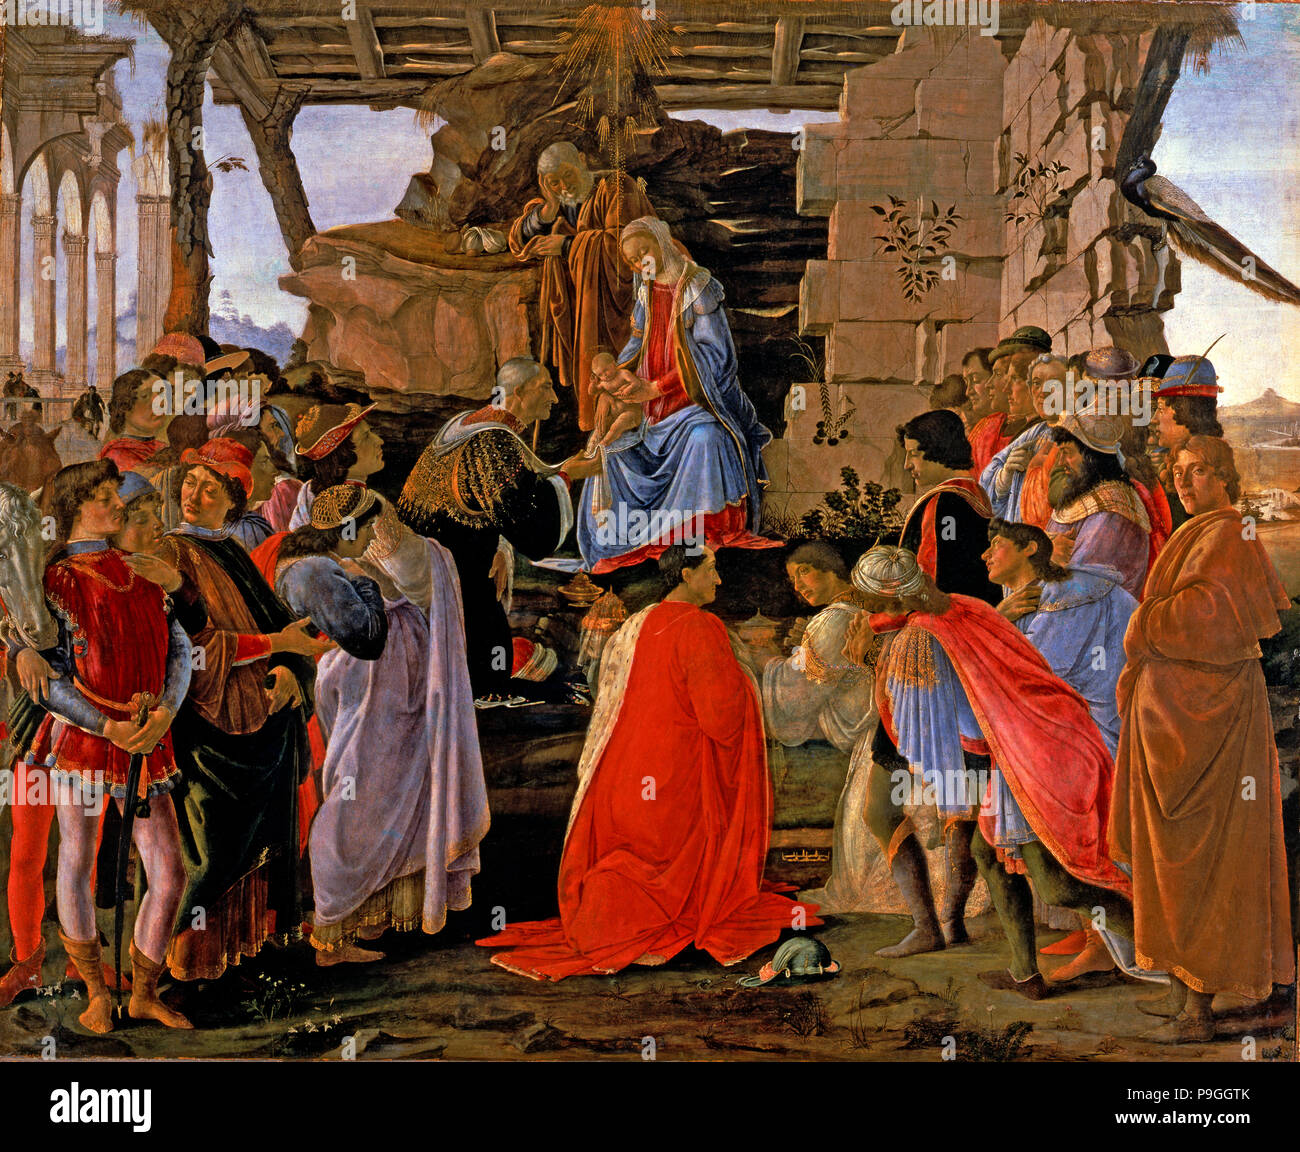 'Adoration of the Magi' by Sandro Botticelli. Stock Photo